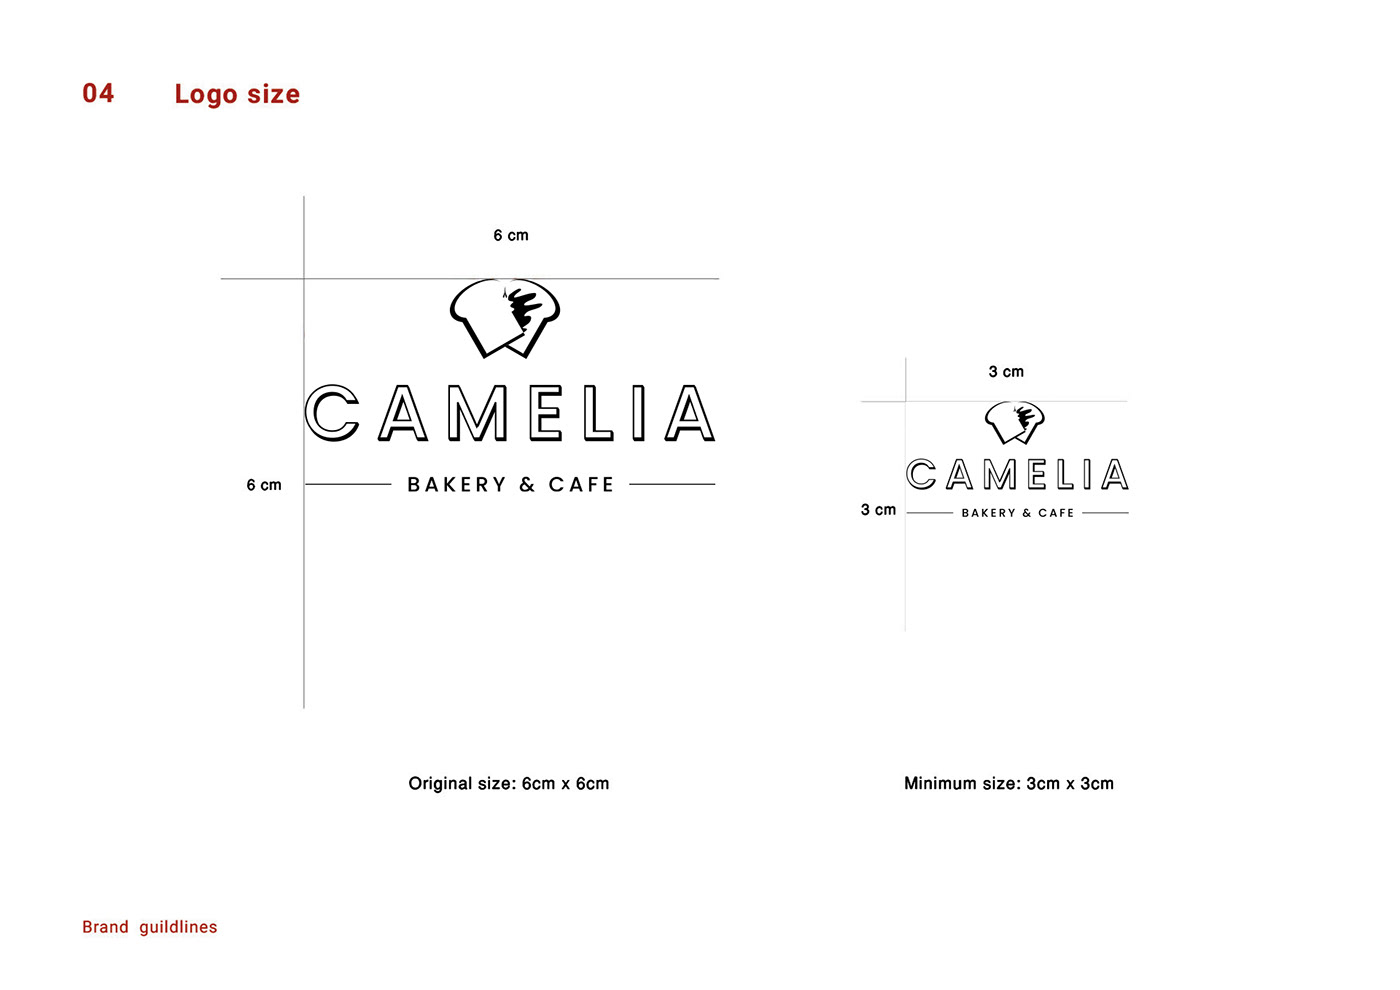 brand branding  design cafe bakery malaysia camelia bread logo